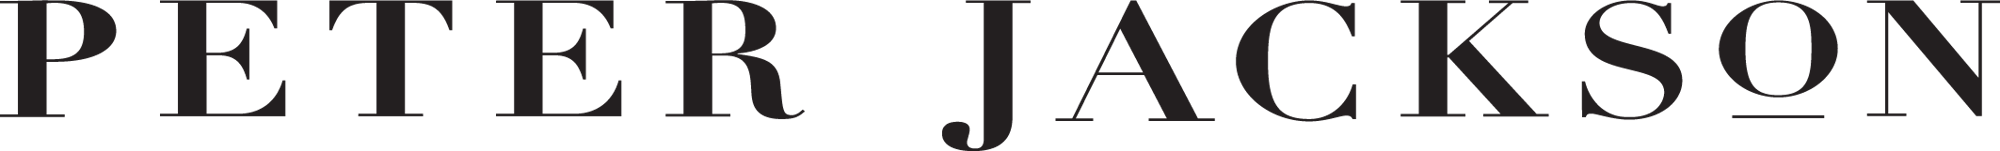 Peter Jacksons Logo